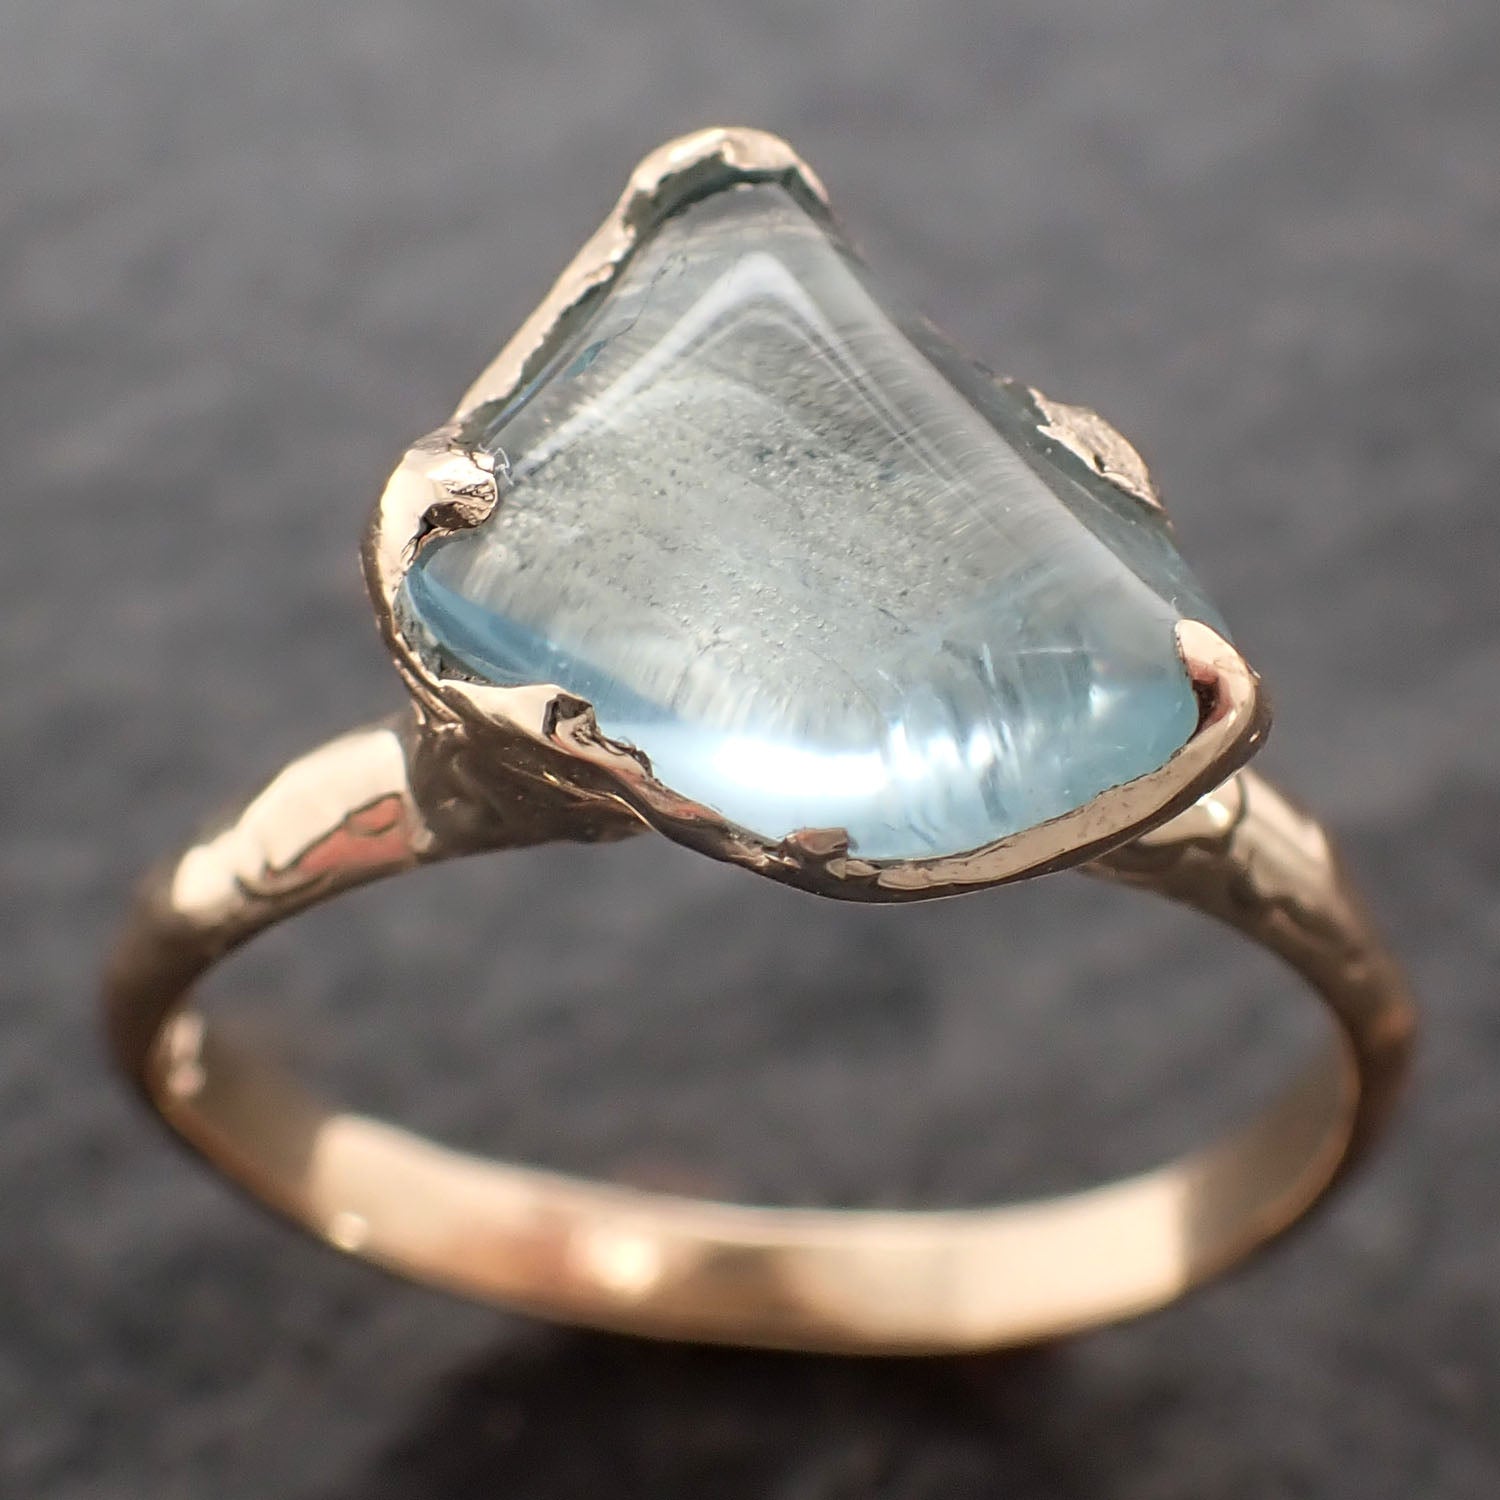 aquamarine pebble candy polished 14k yellow gold solitaire gemstone ring 2670 Alternative Engagement